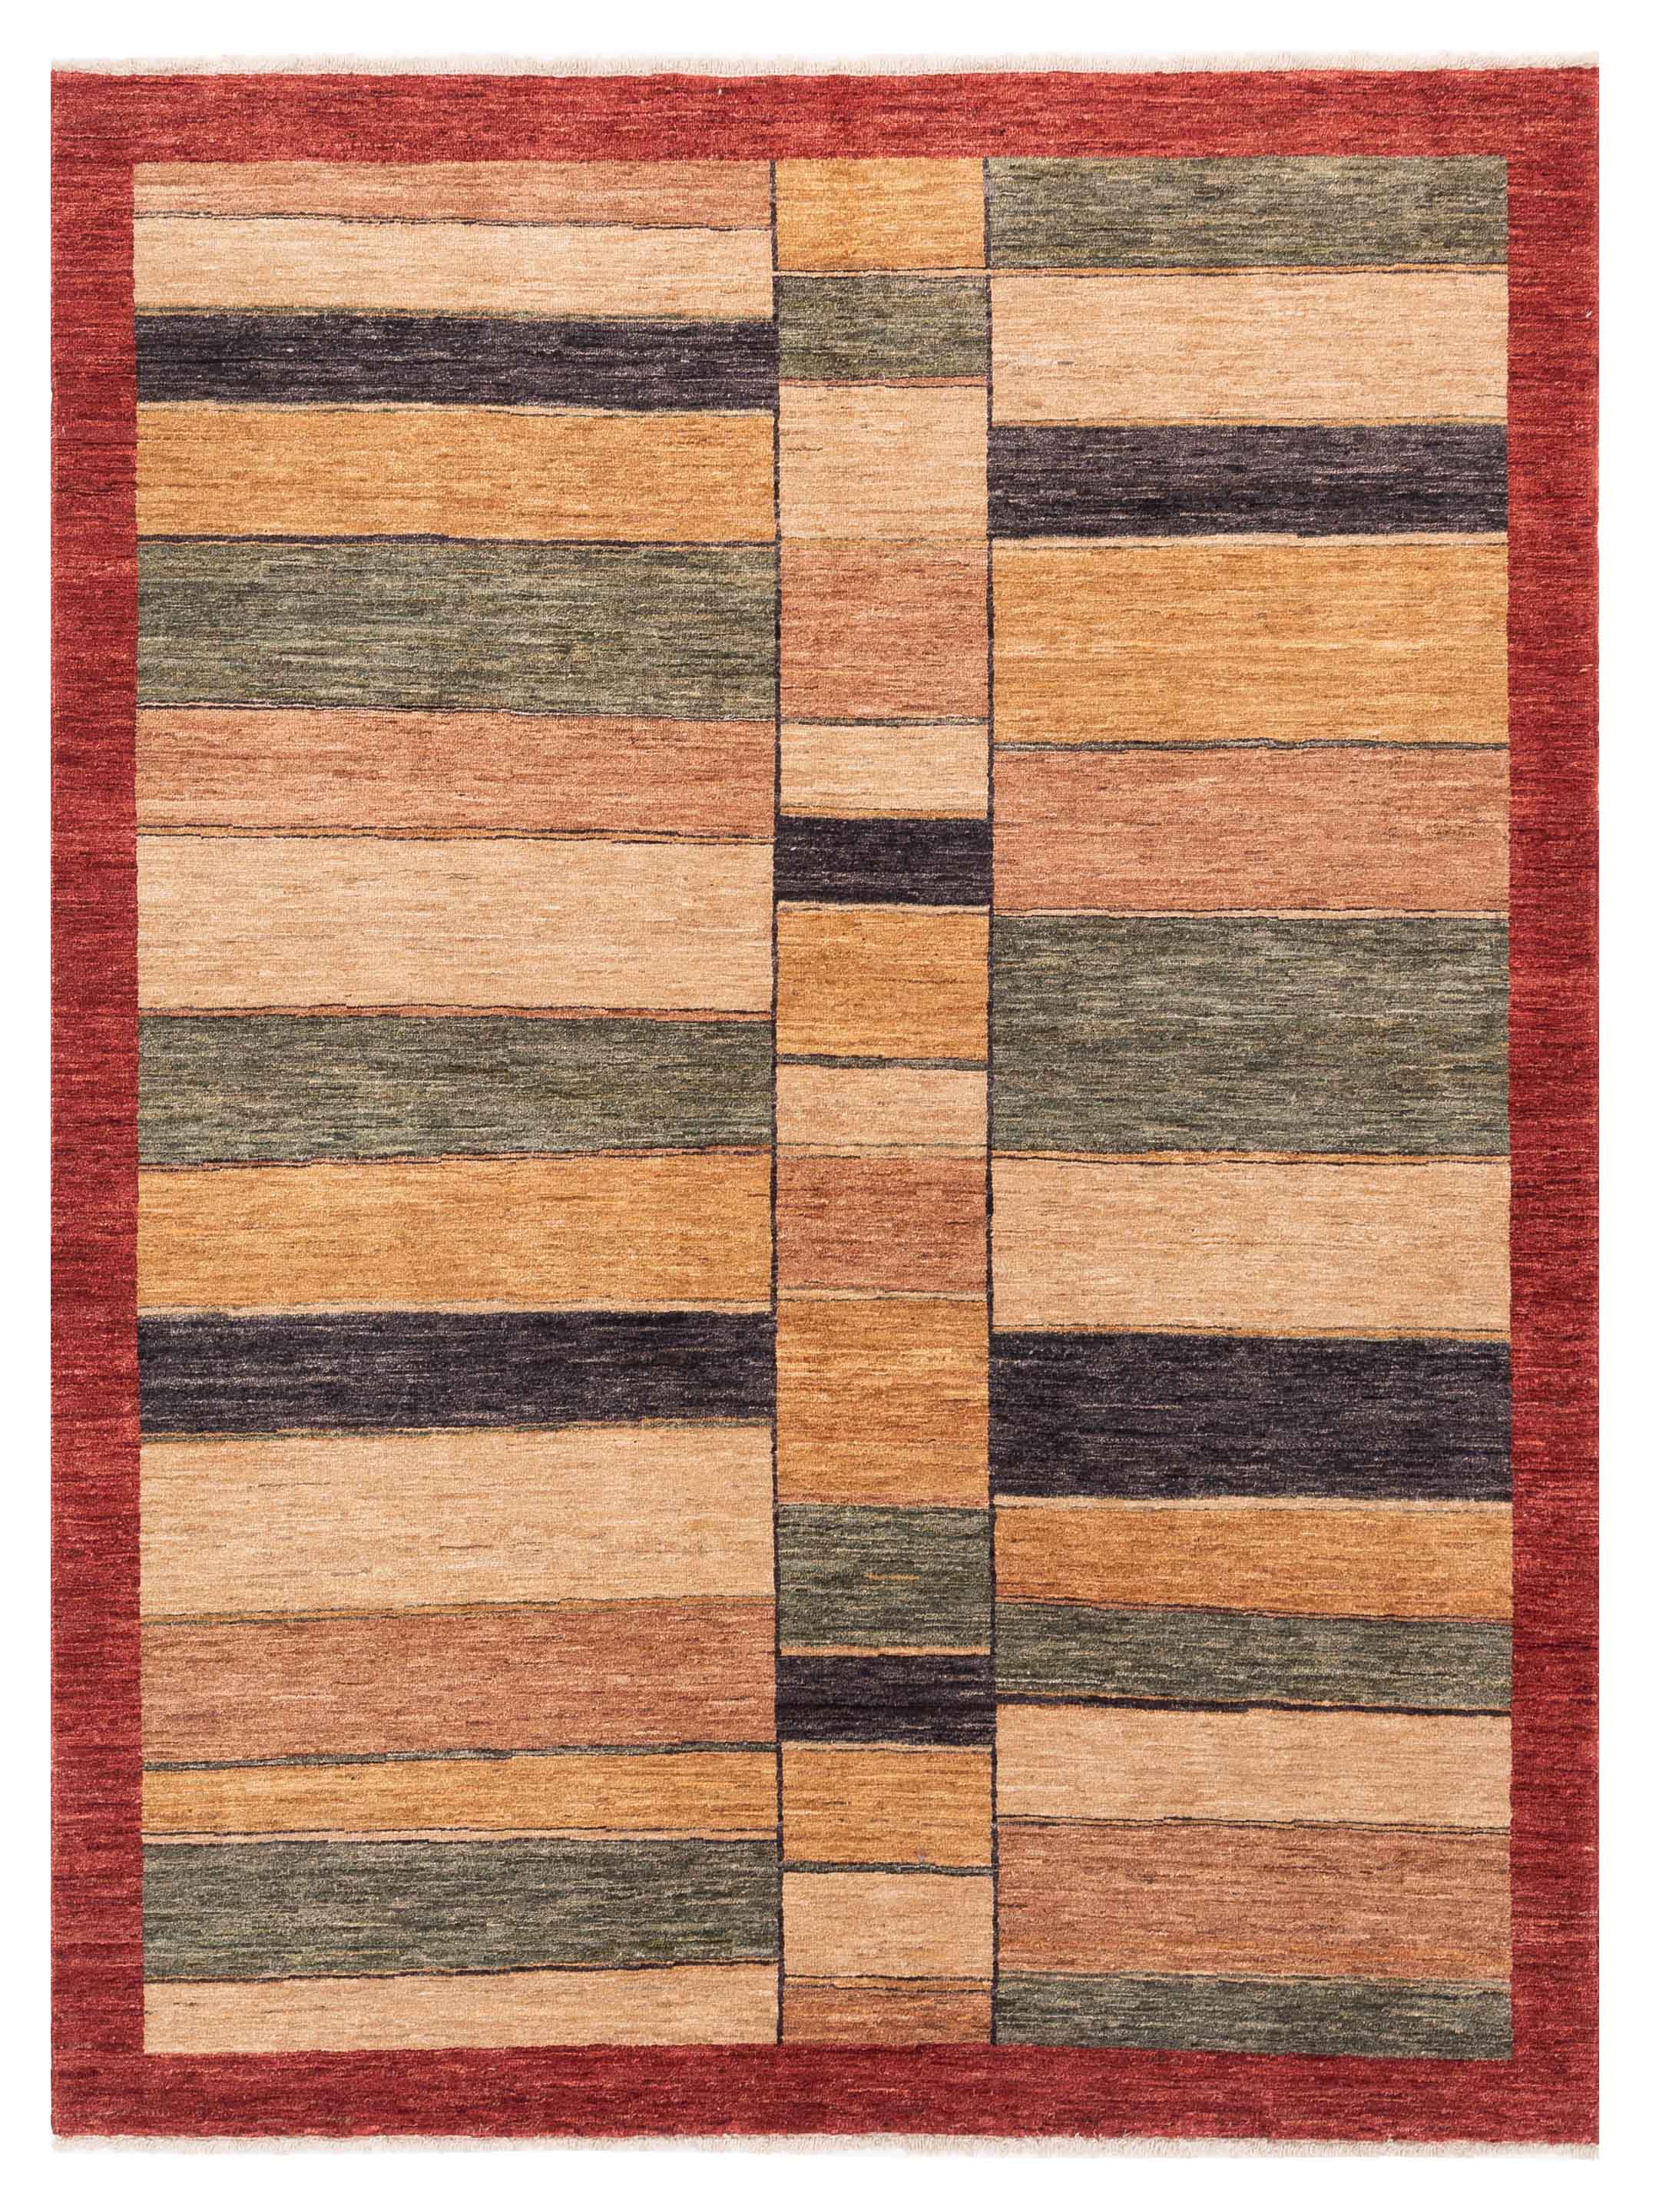 Tribal Multi color area rug	